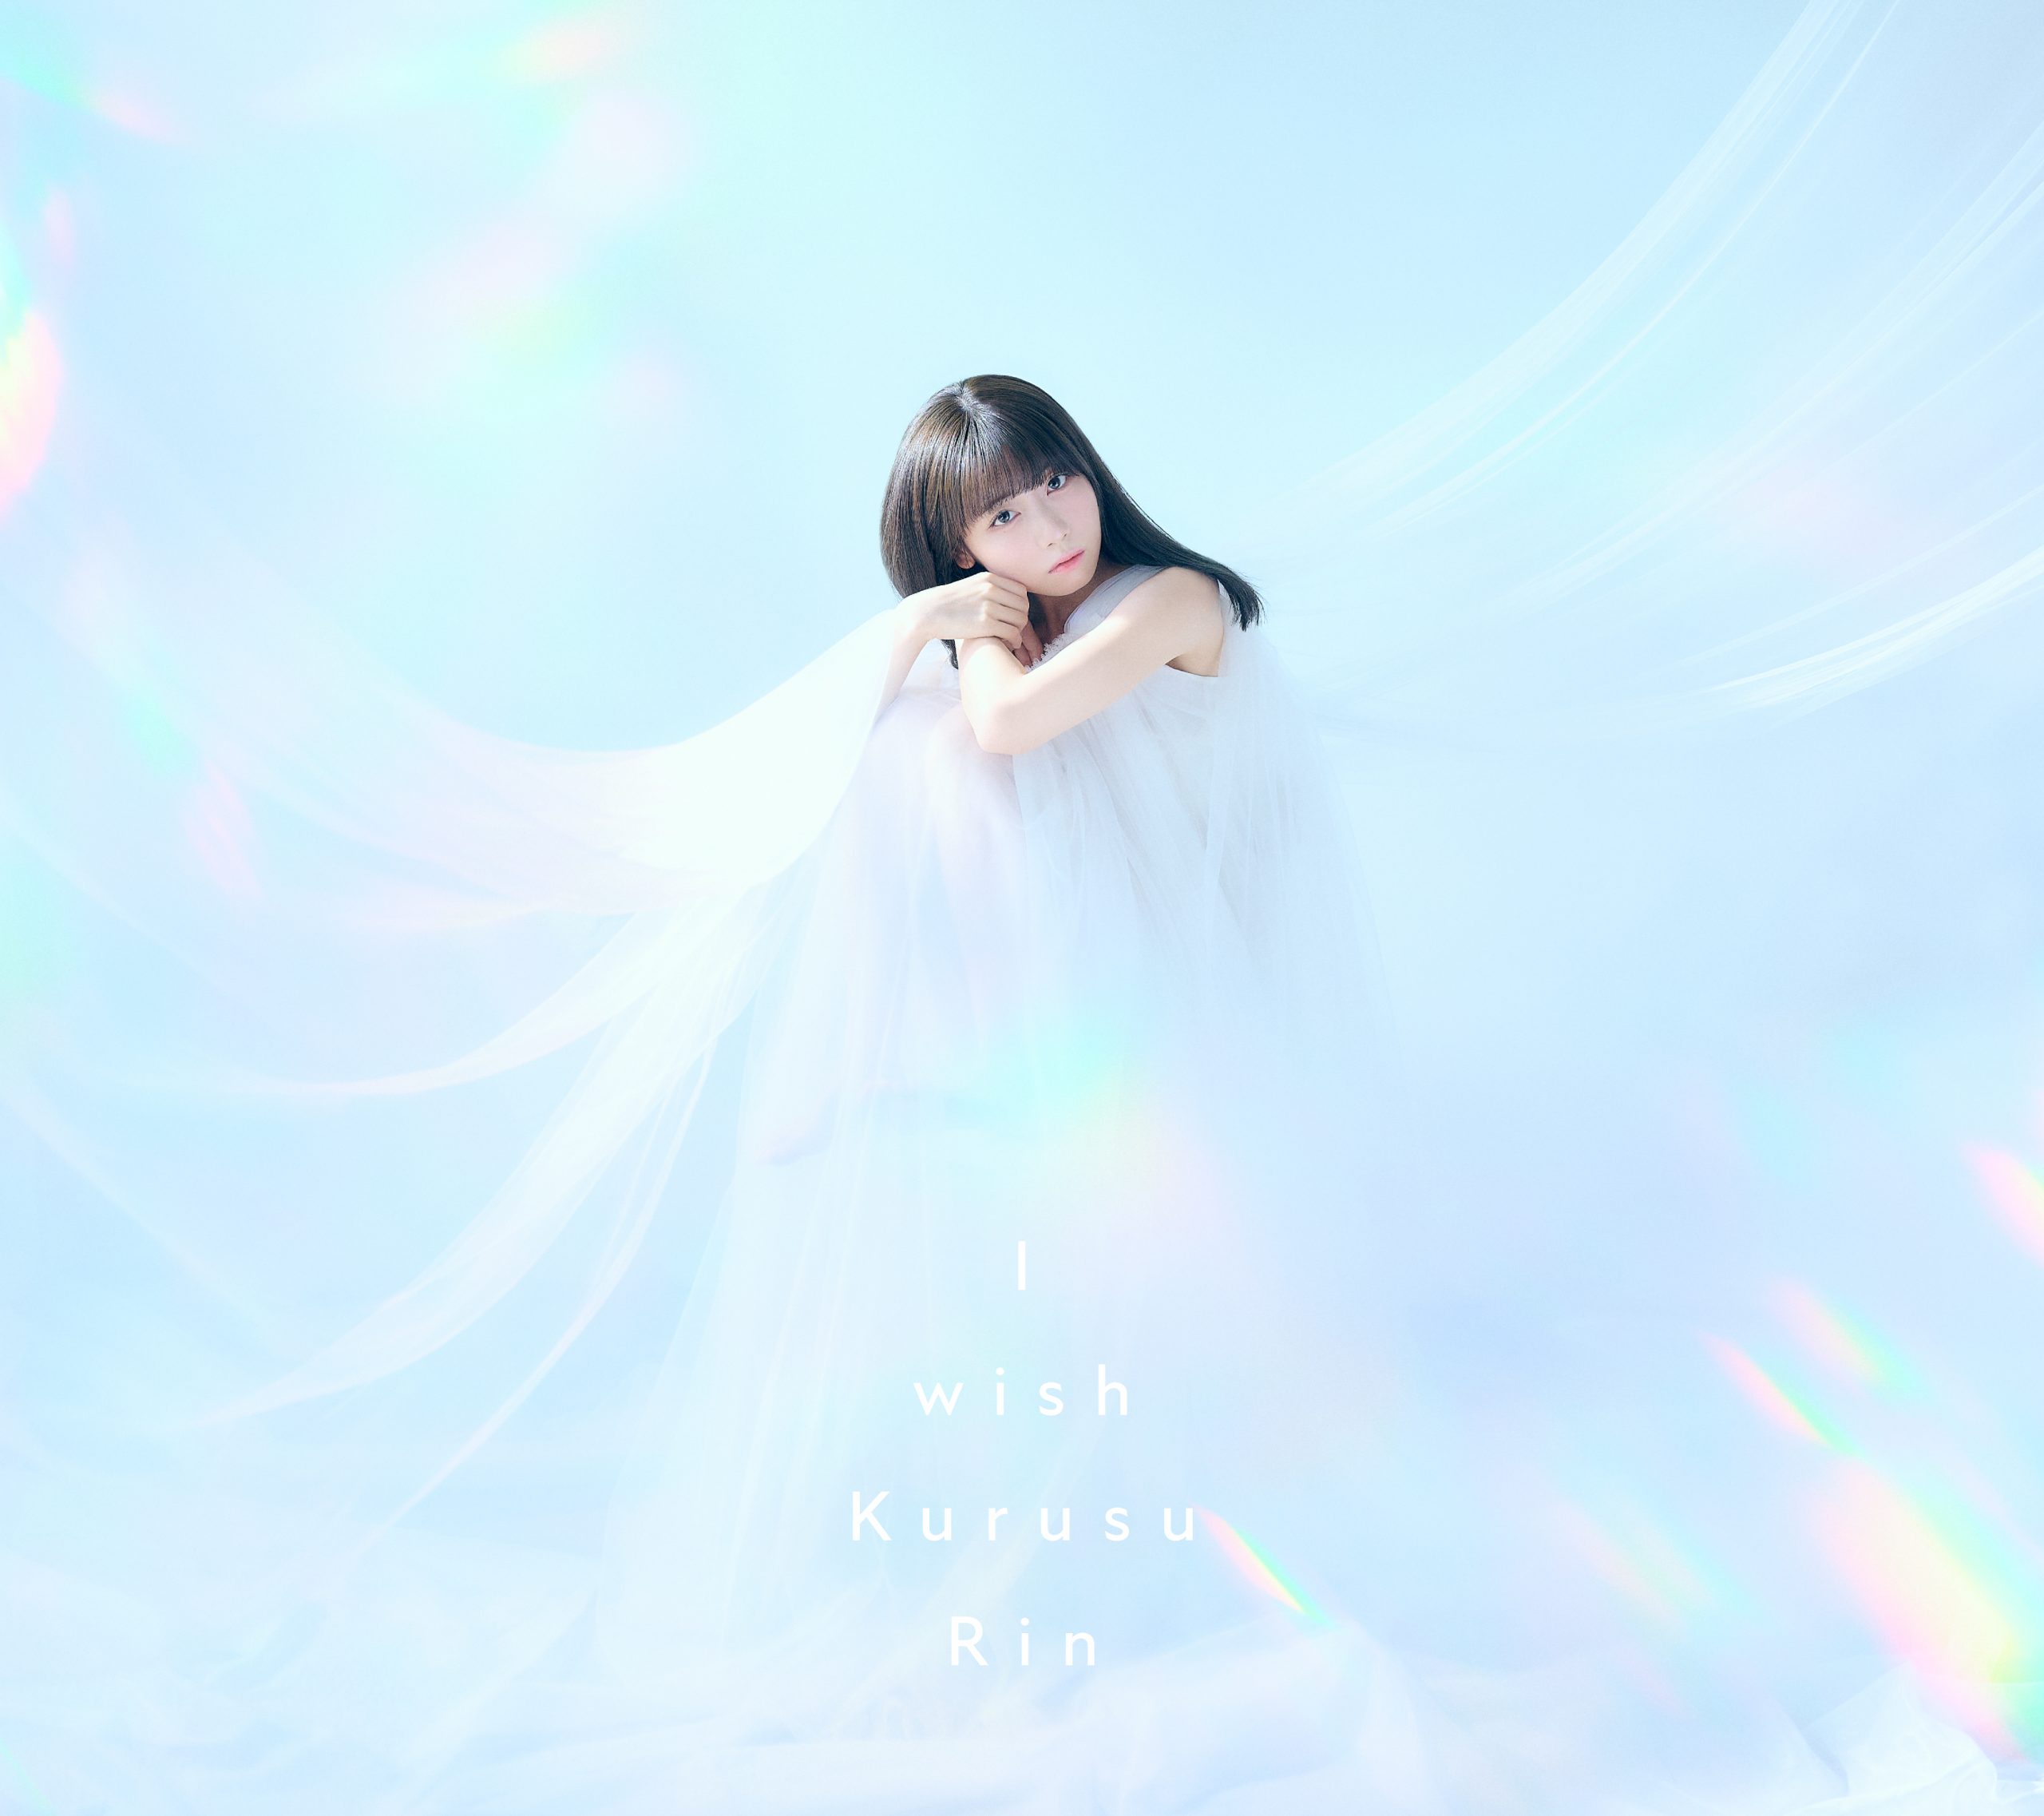 kurusu_Asya_1230_fix-scaled Rin Kurusu to Sing OP of Kaminaki Sekai no Kamisama Katsudou! Debut Single “I wish” Announced!